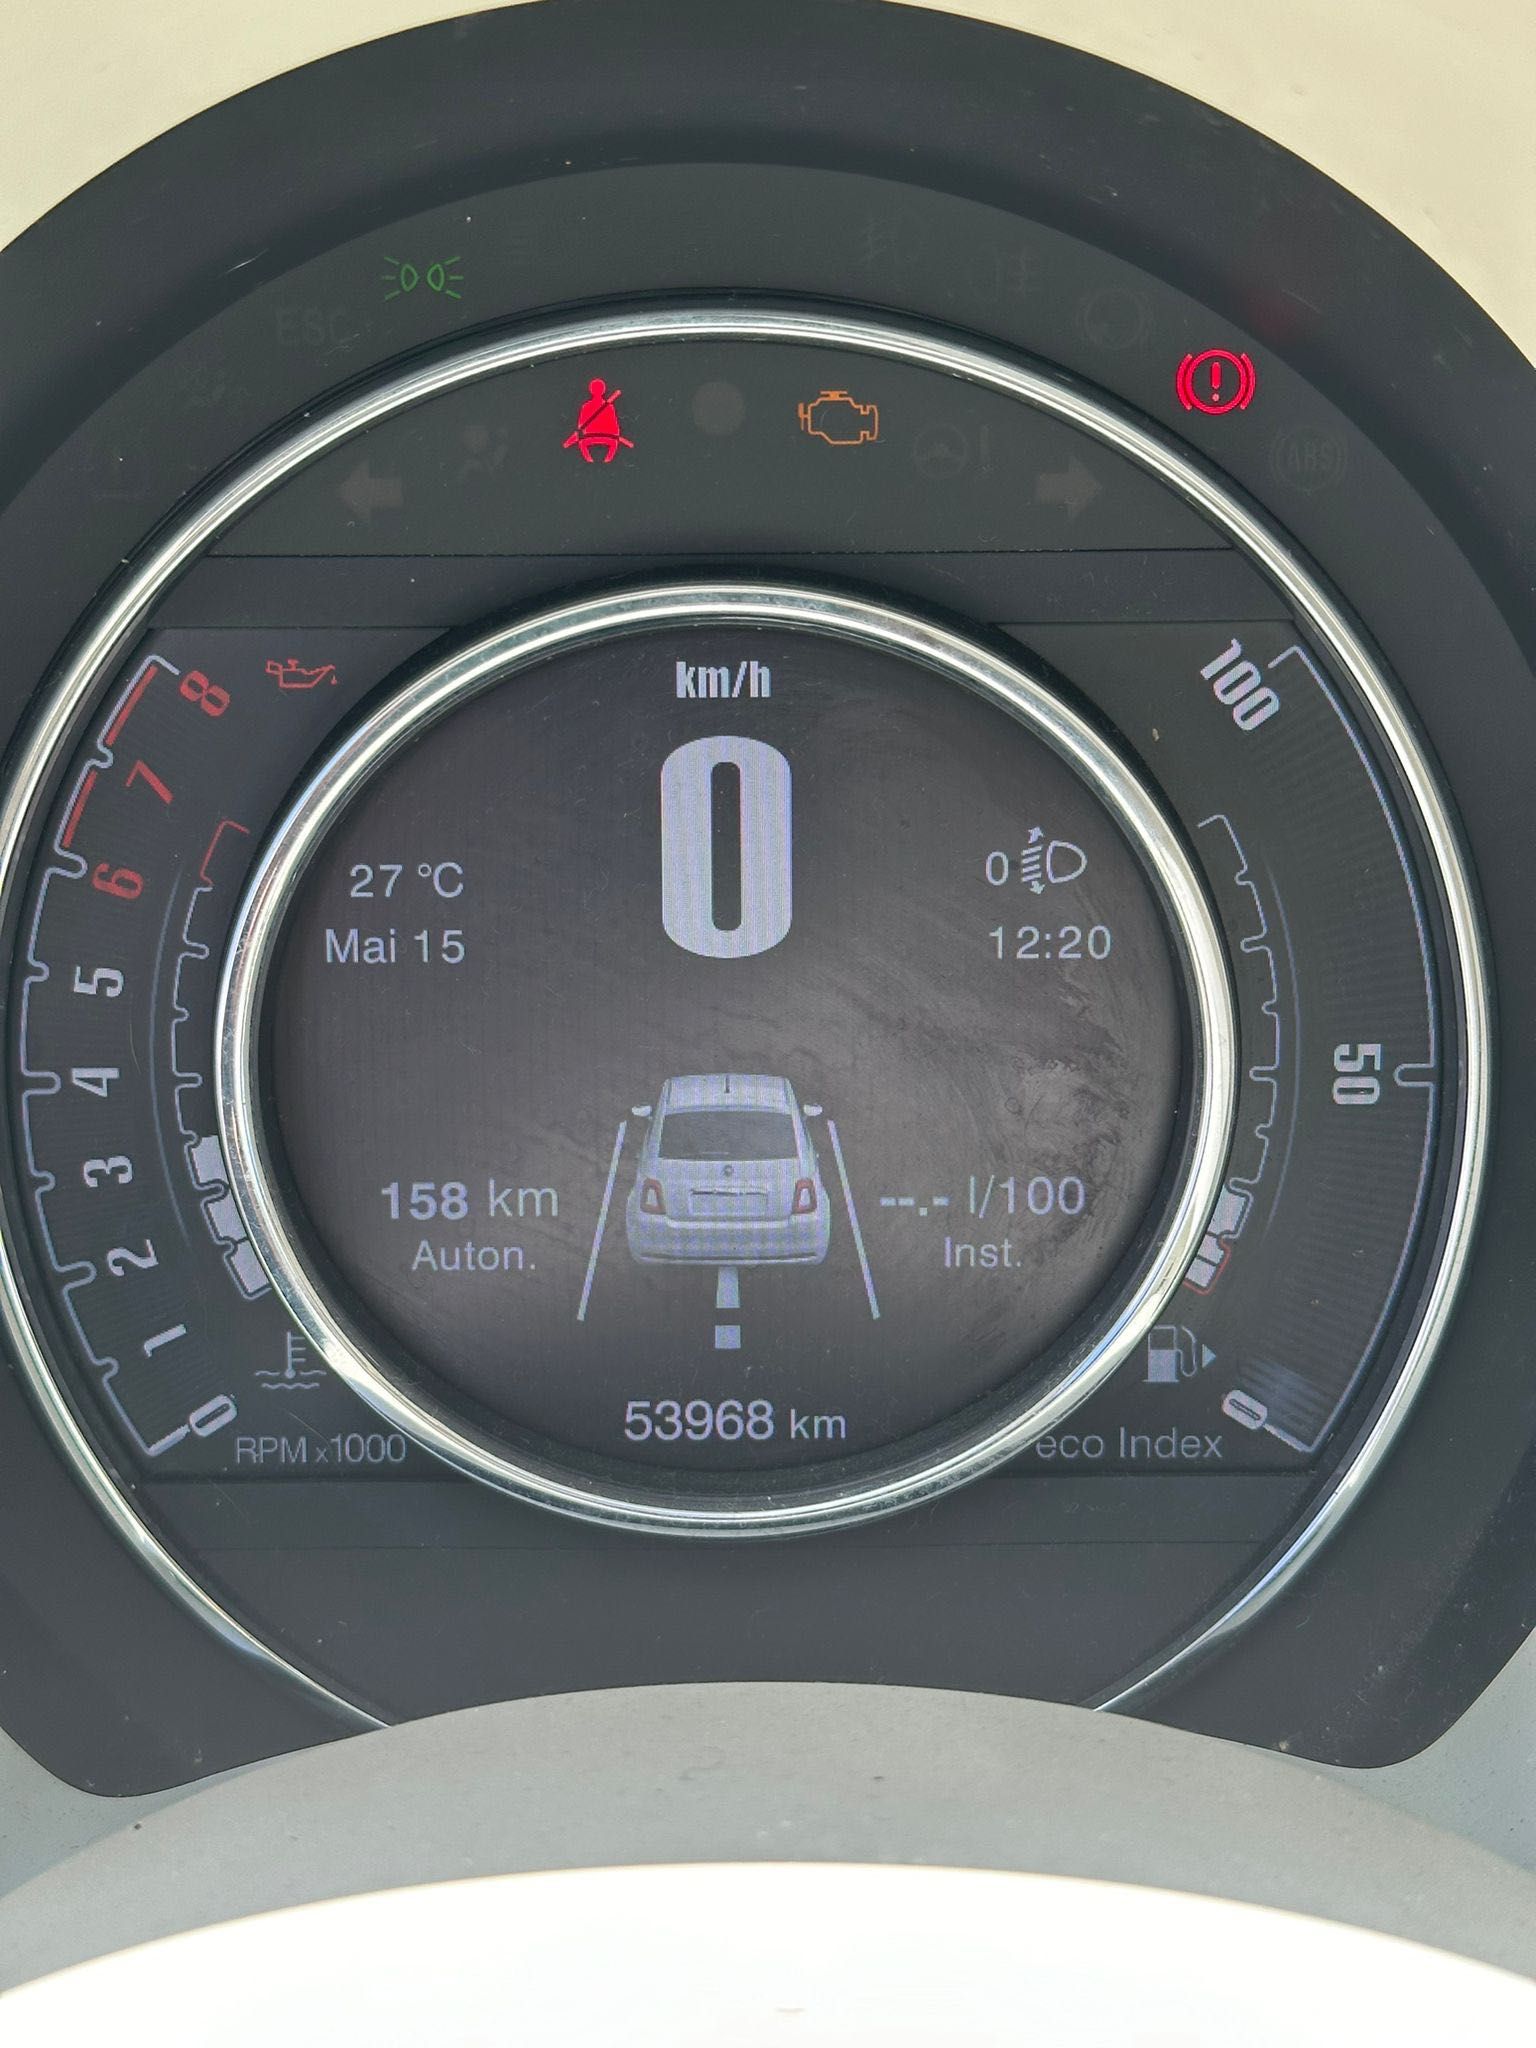 Fiat 500 branco -10000€  com 50mil km